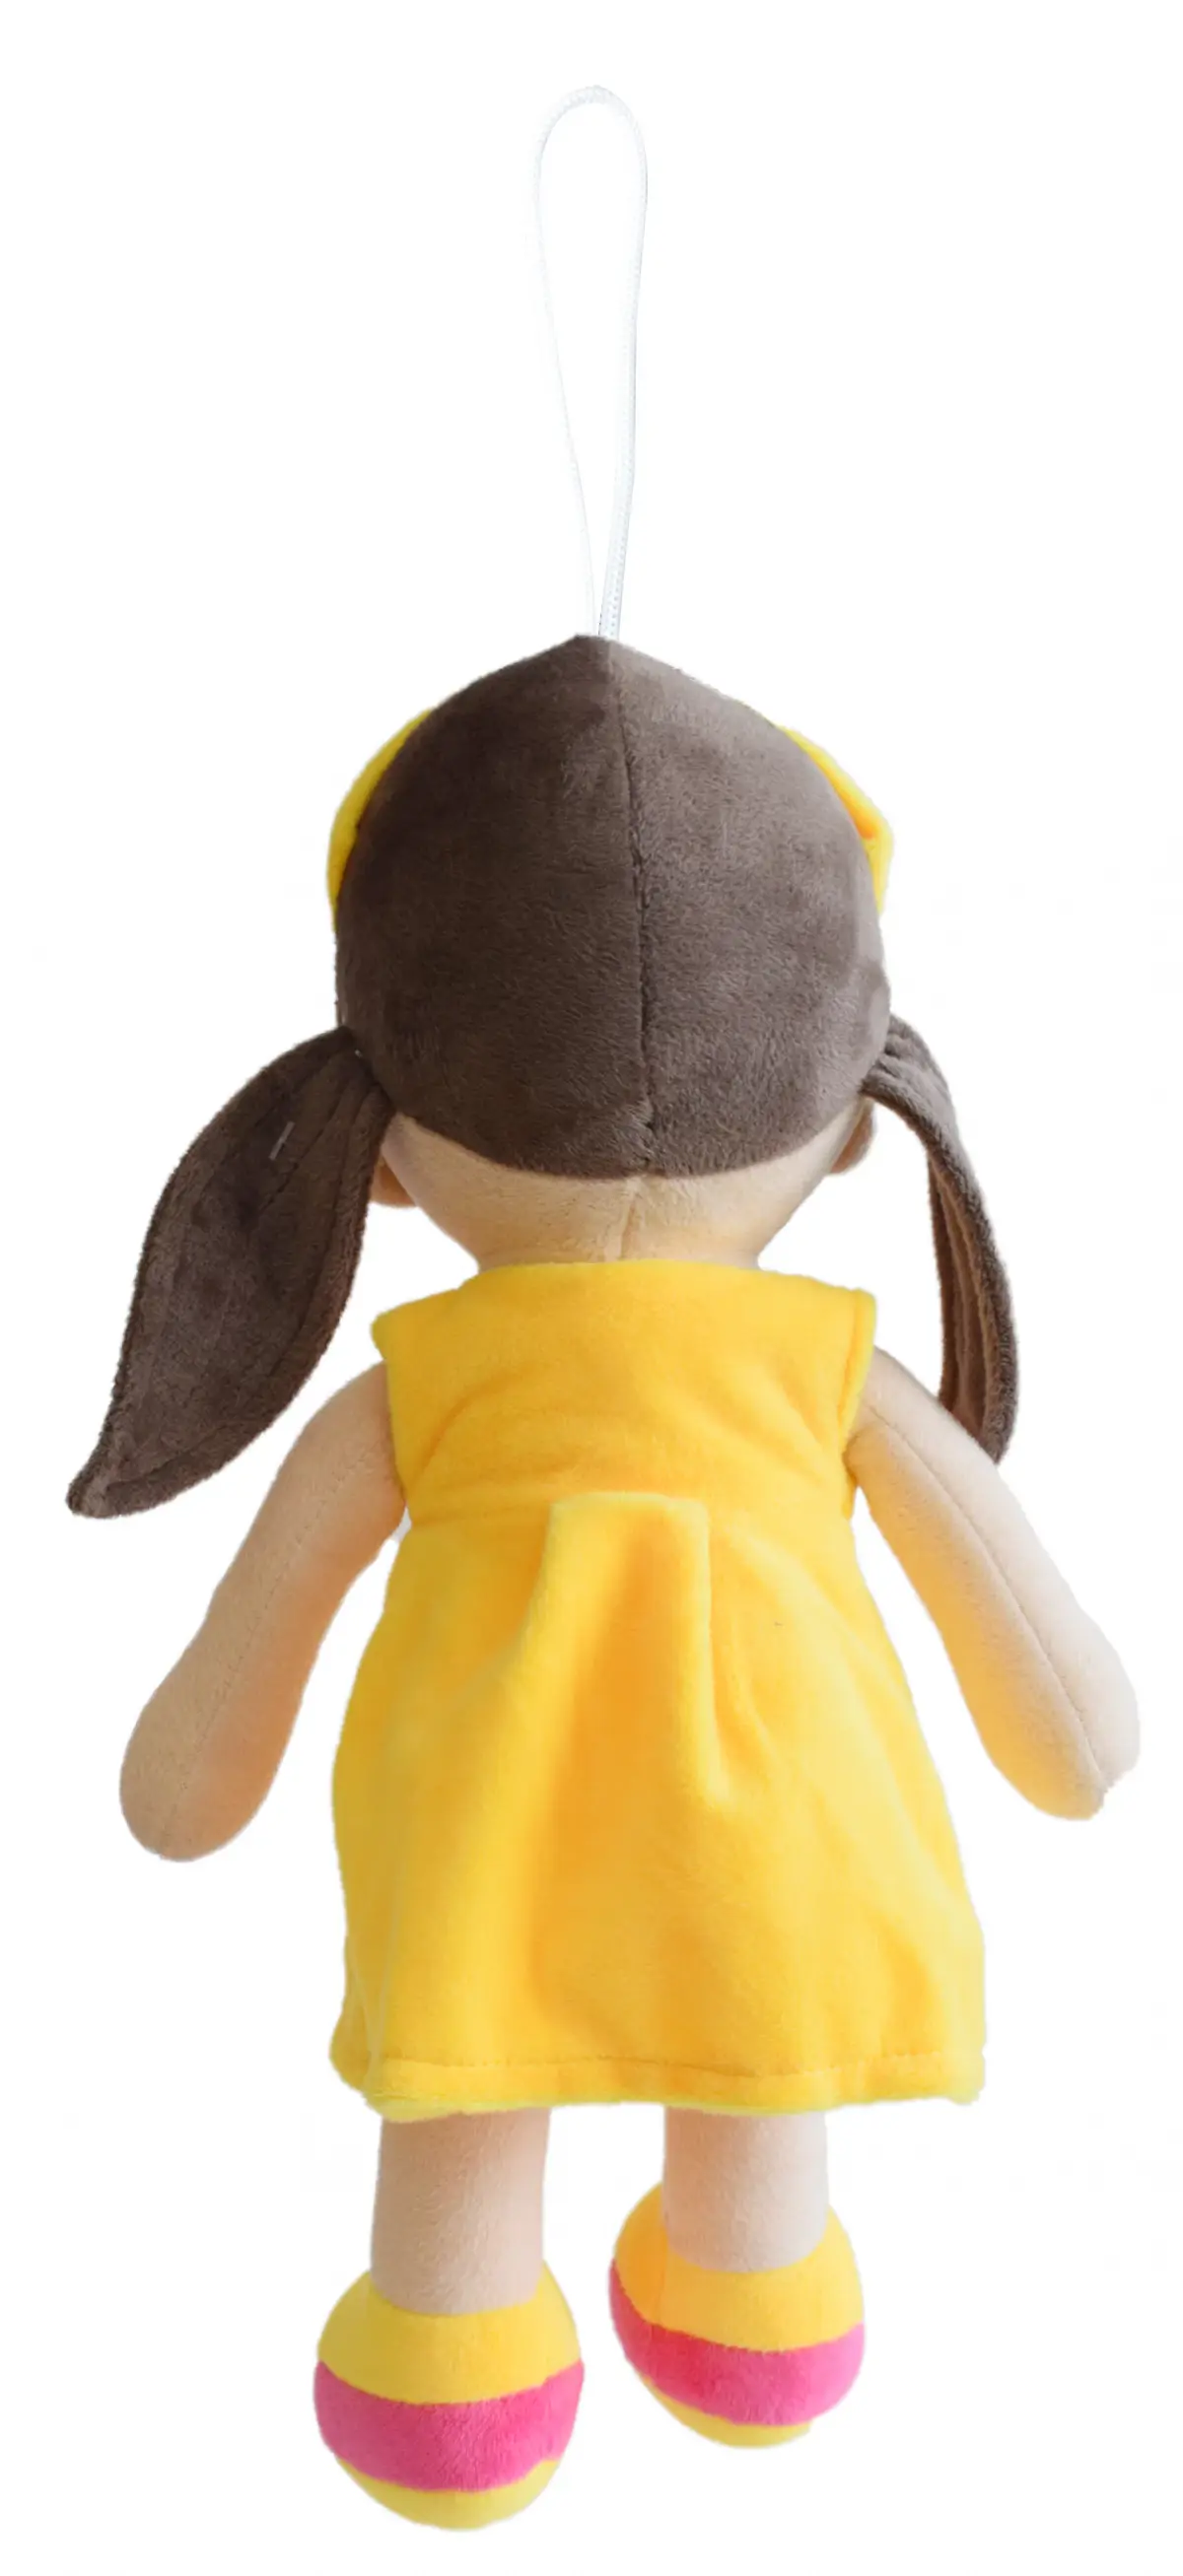 Plush Cute Super Soft Toy Huggable Doll By Mirada, 38Cm, Yellow